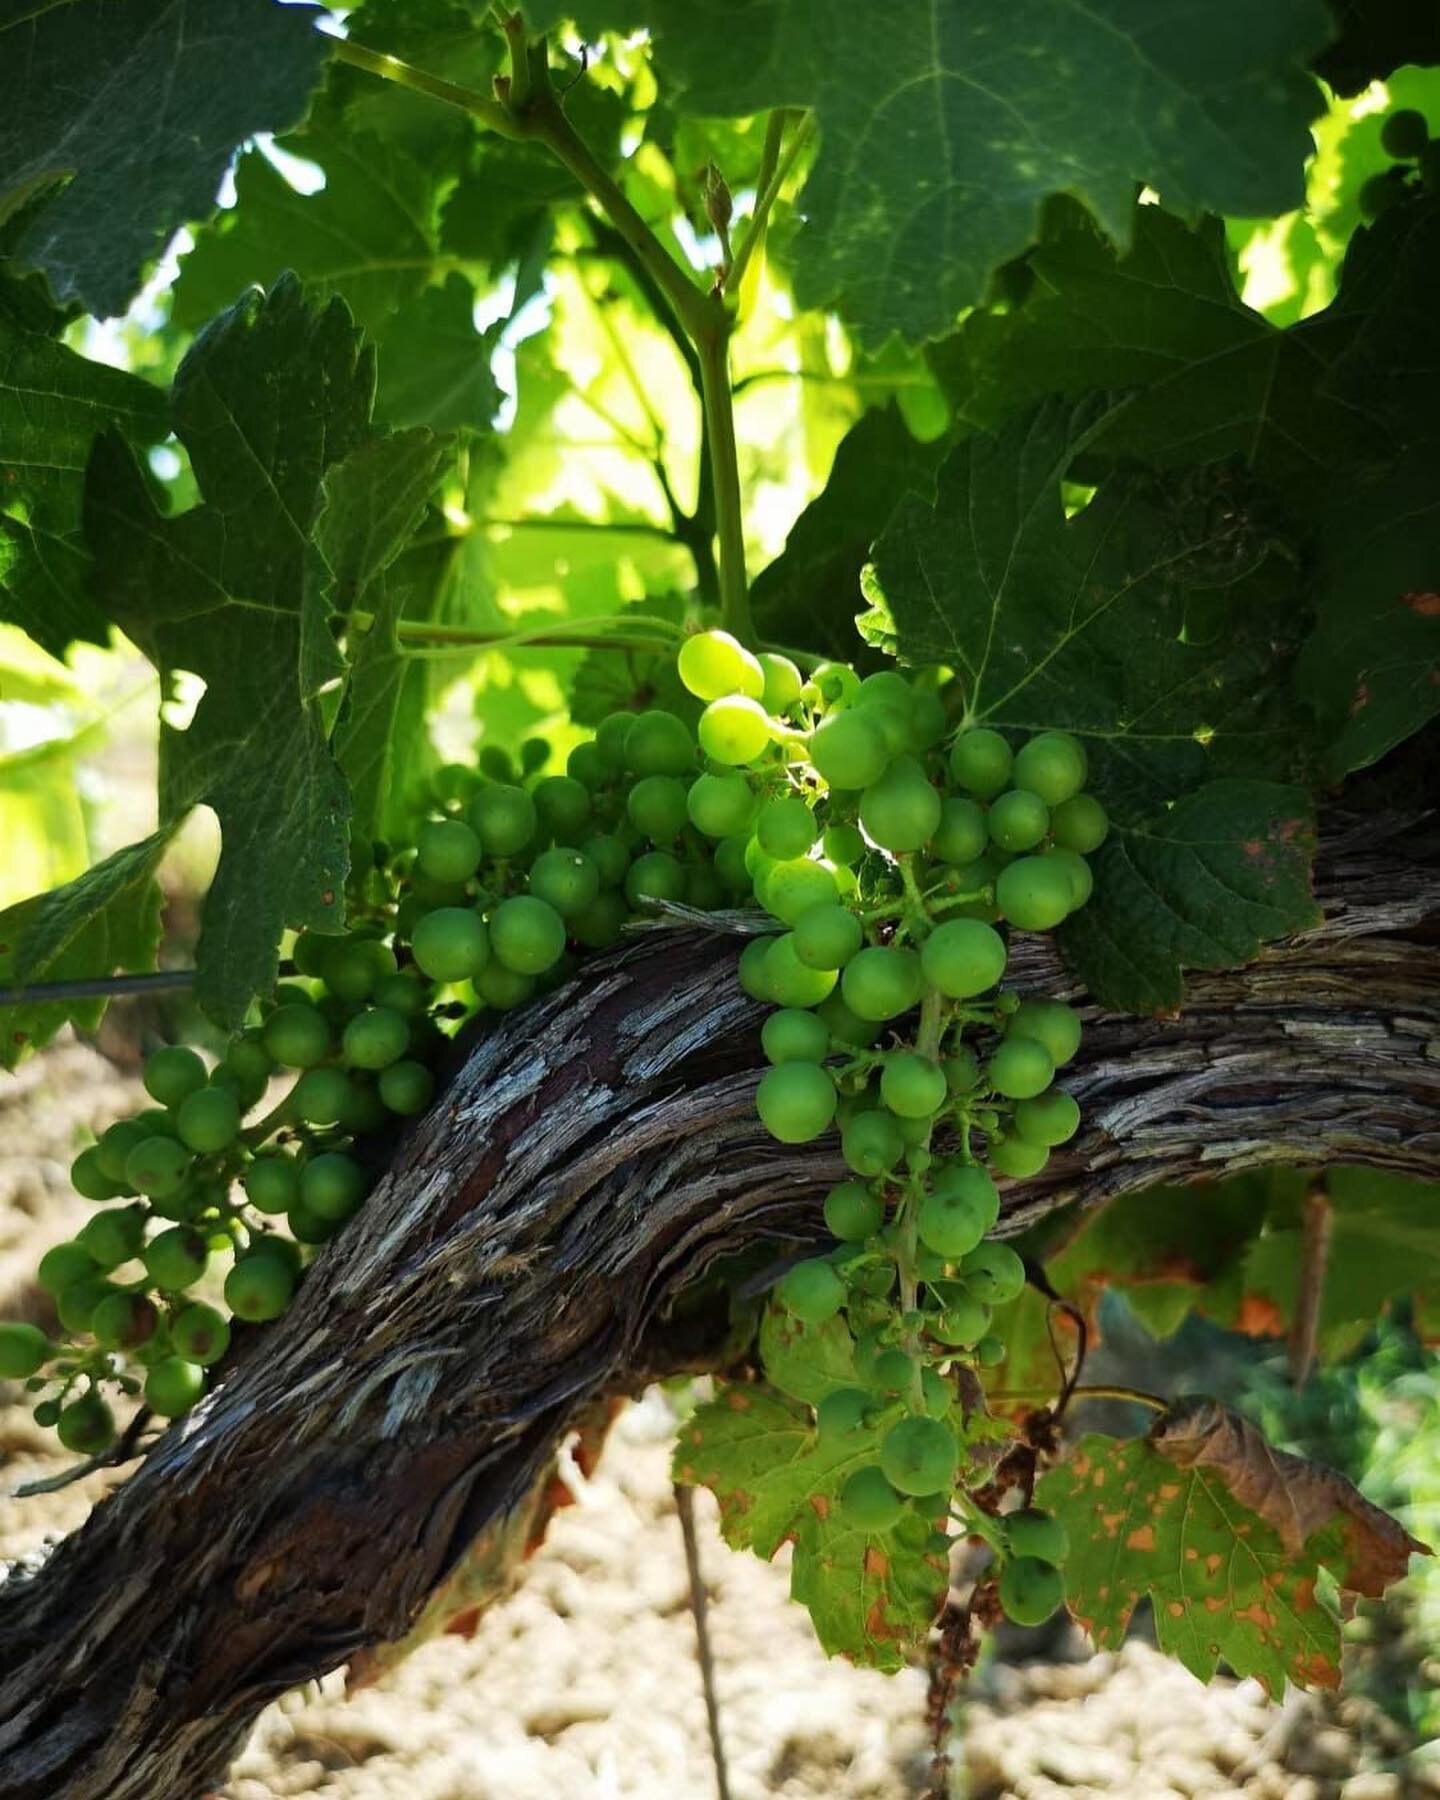 Our grapes grow, soon the harvest 🍇 @tenutalamborghini
.
. 
. 
#umbria #lagotrasimeno #lamborghini #wineresort #wine #golf #wineinstagram #golfinstagram #era #trescone #torami #campoleone #loveit #restaurant #lamborghinisince1968 #foodandwine #winec